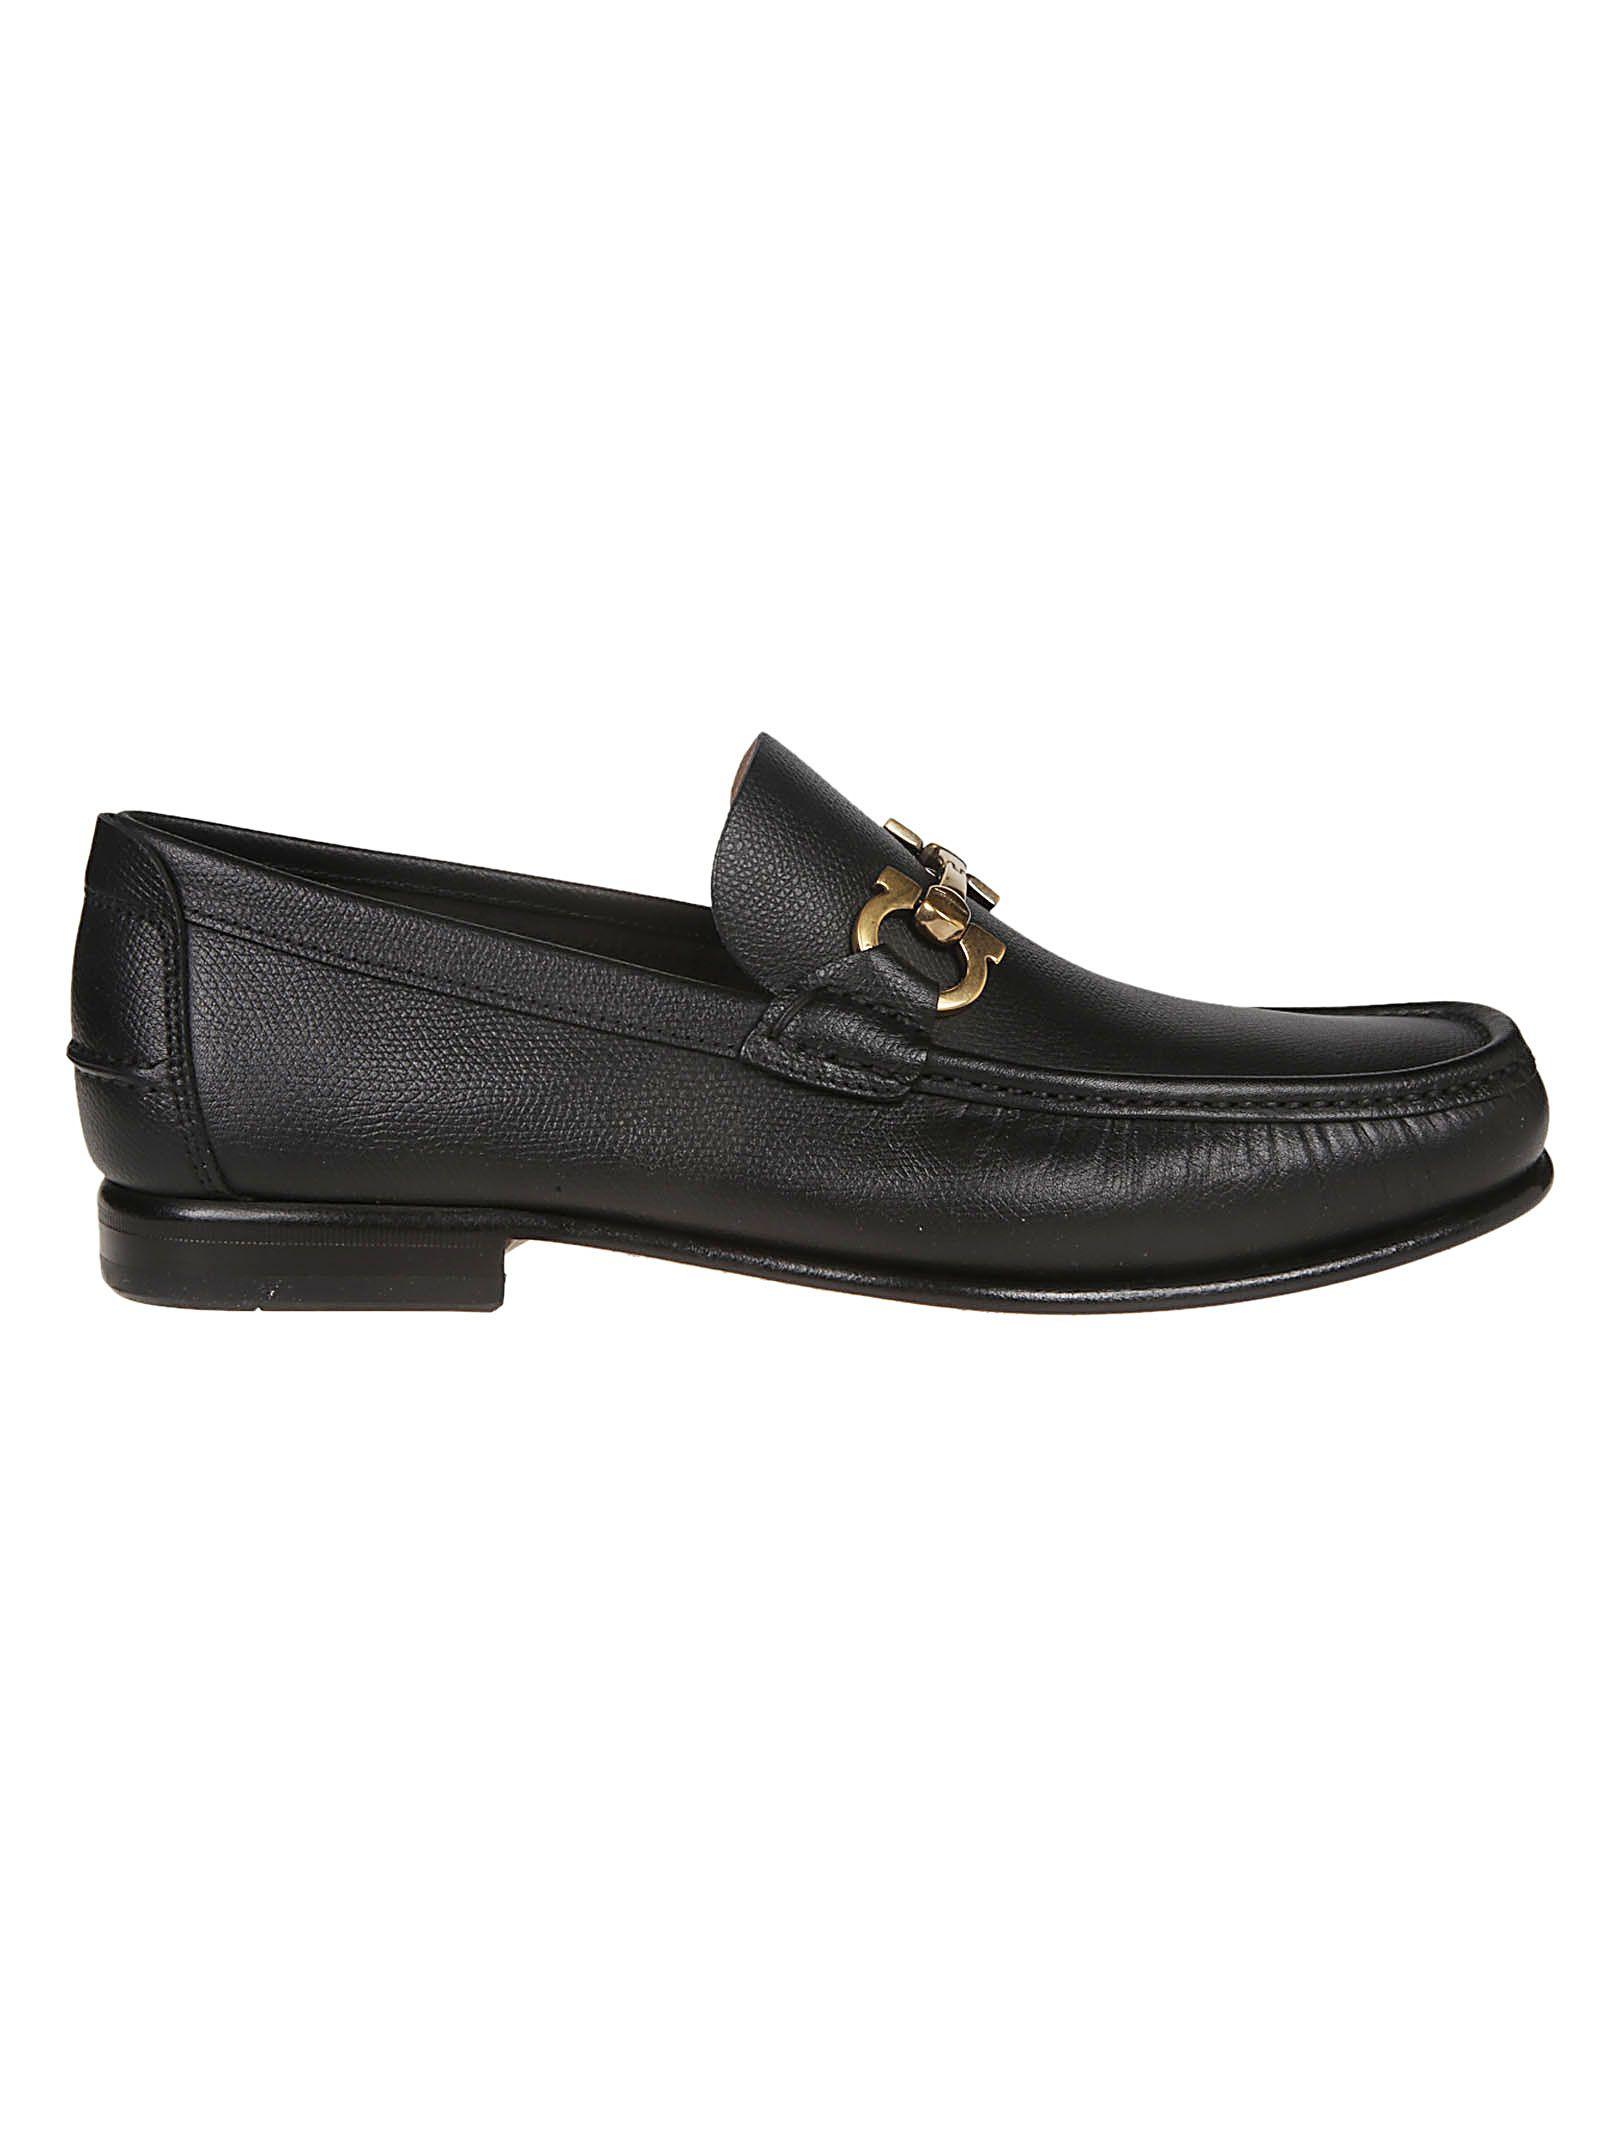 Ferragamo Black Leather Loafers in Black for Men - Lyst